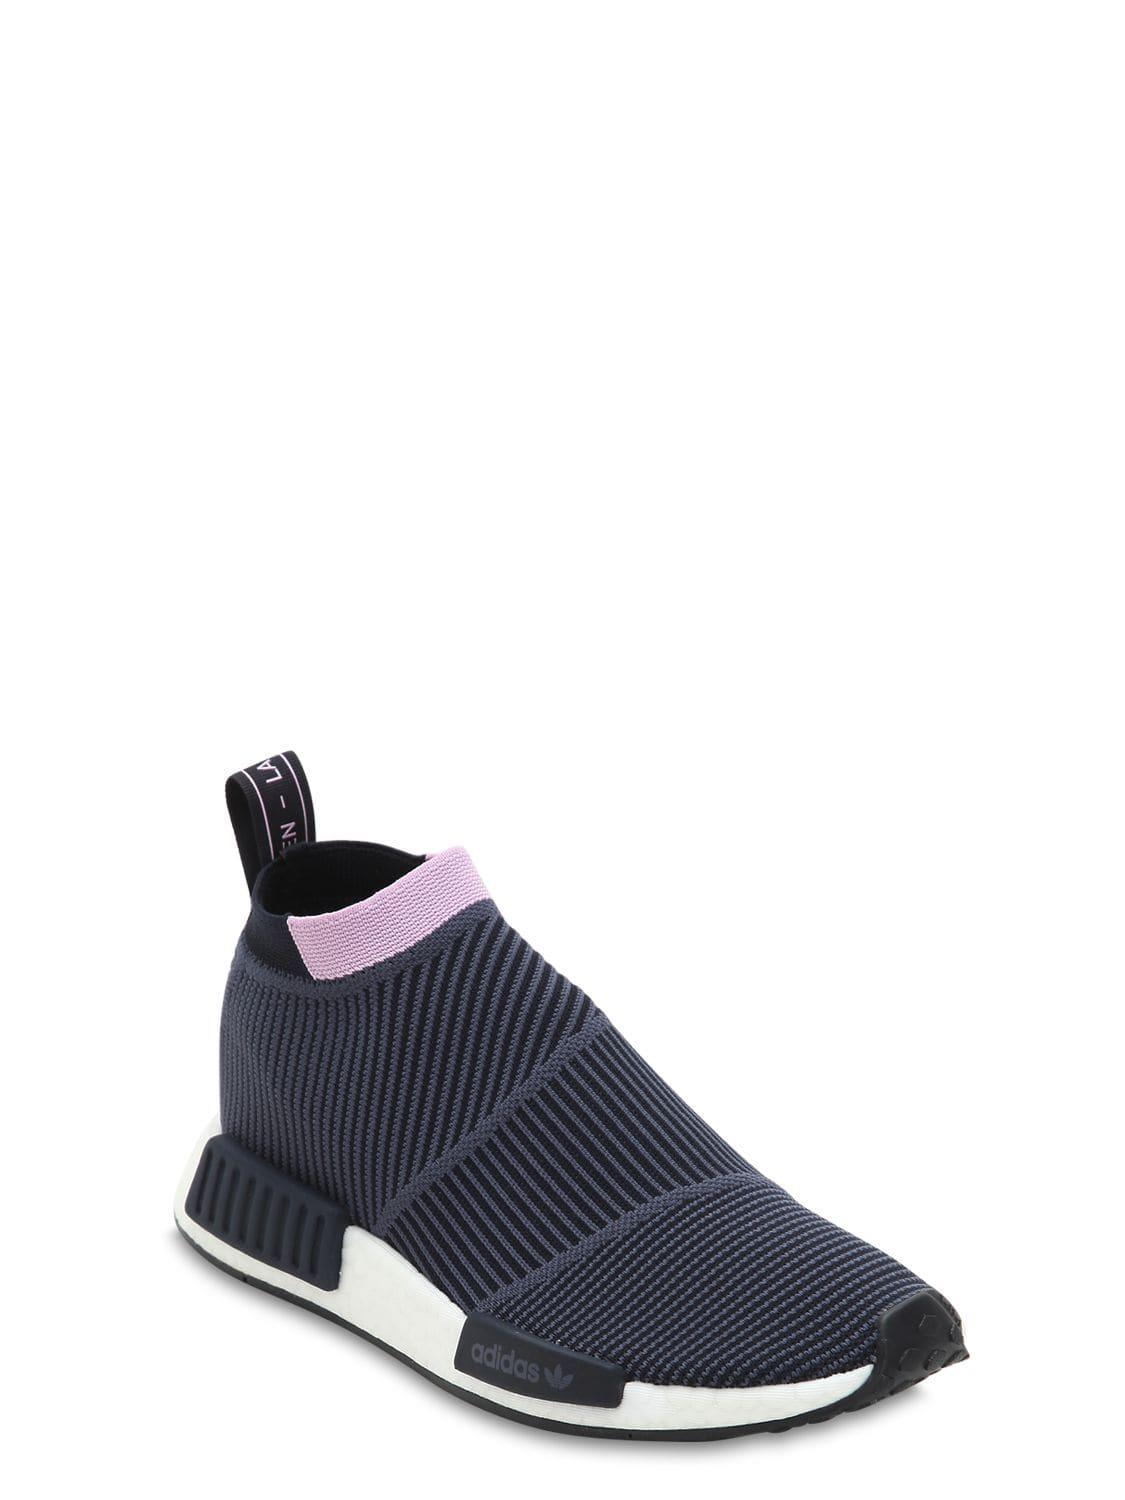 adidas Originals Nmd Cs1 Primeknit Sneakers in Grey (Gray) - Lyst